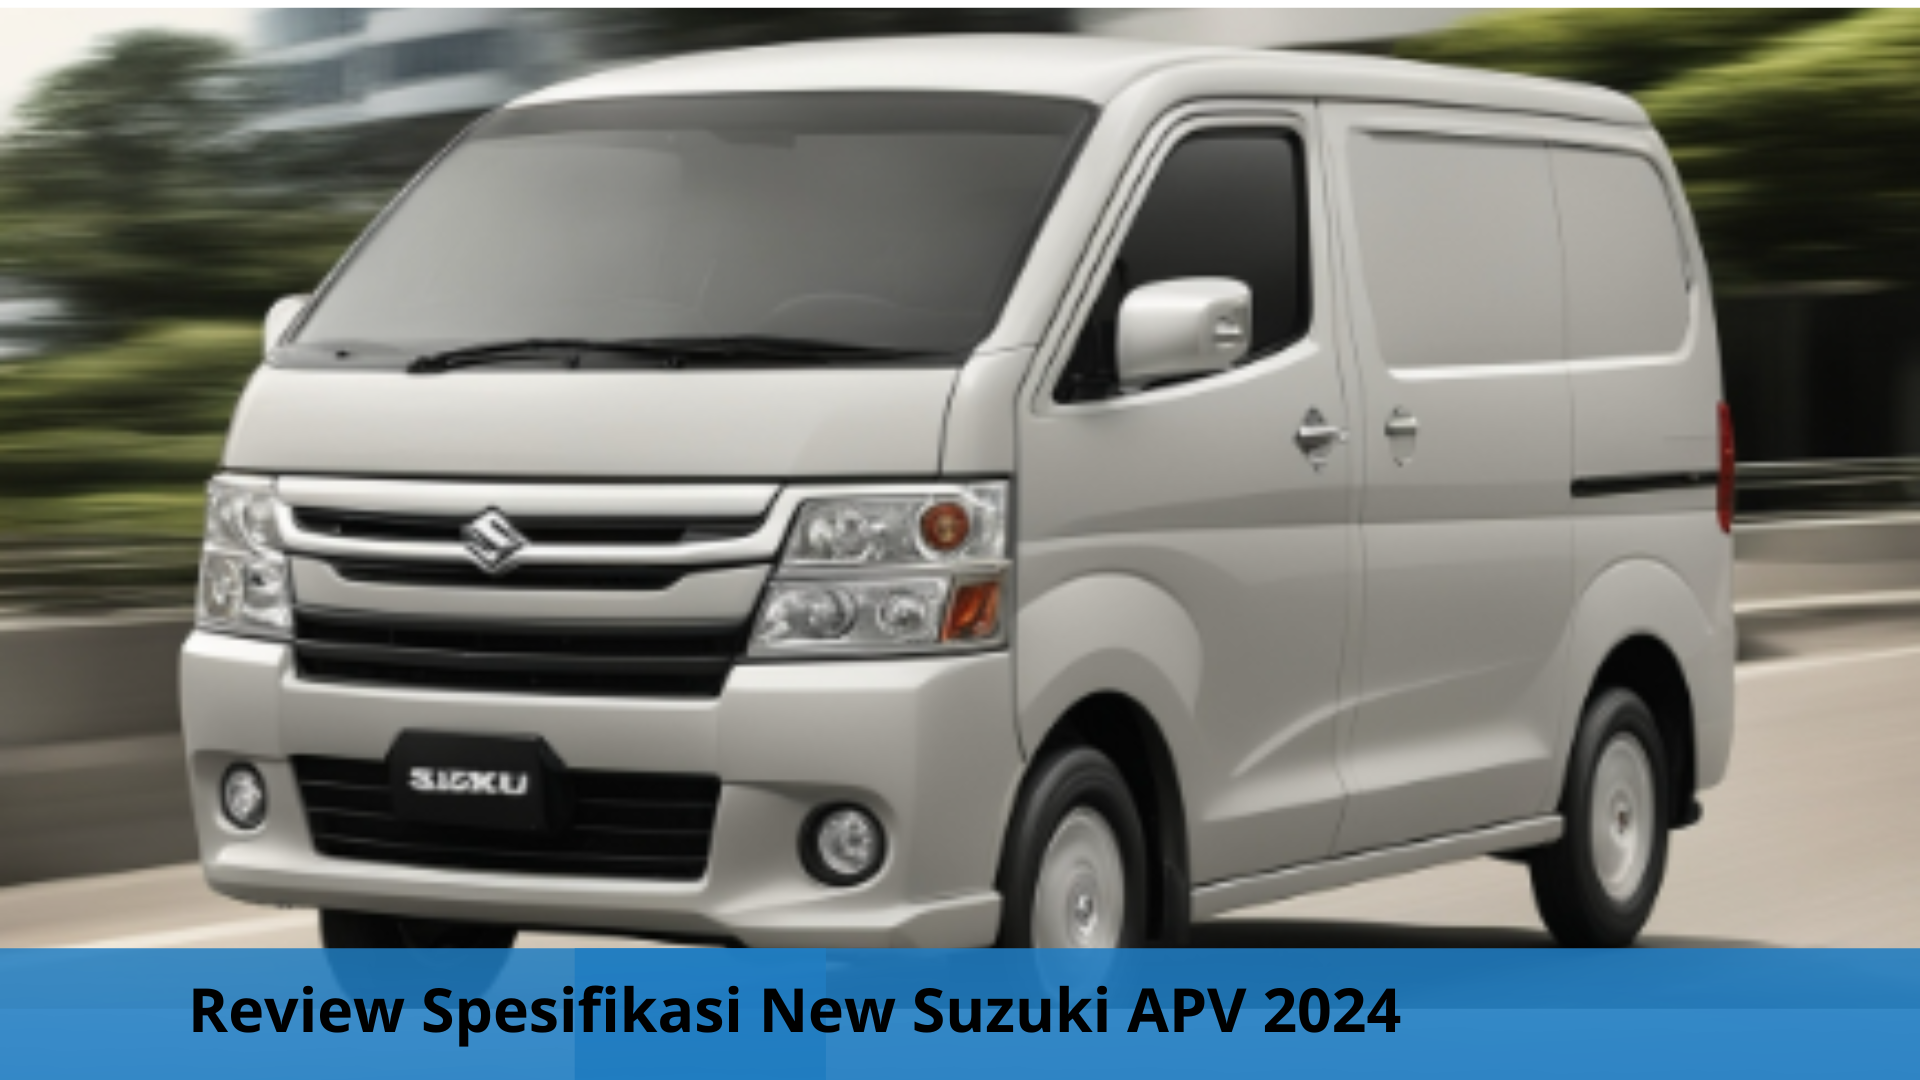 Spesifikasi New Suzuki APV 2024 Lengkap dengan Simulasi Kreditnya, Bikin Perjalan Mudik Keluarga Nyaman